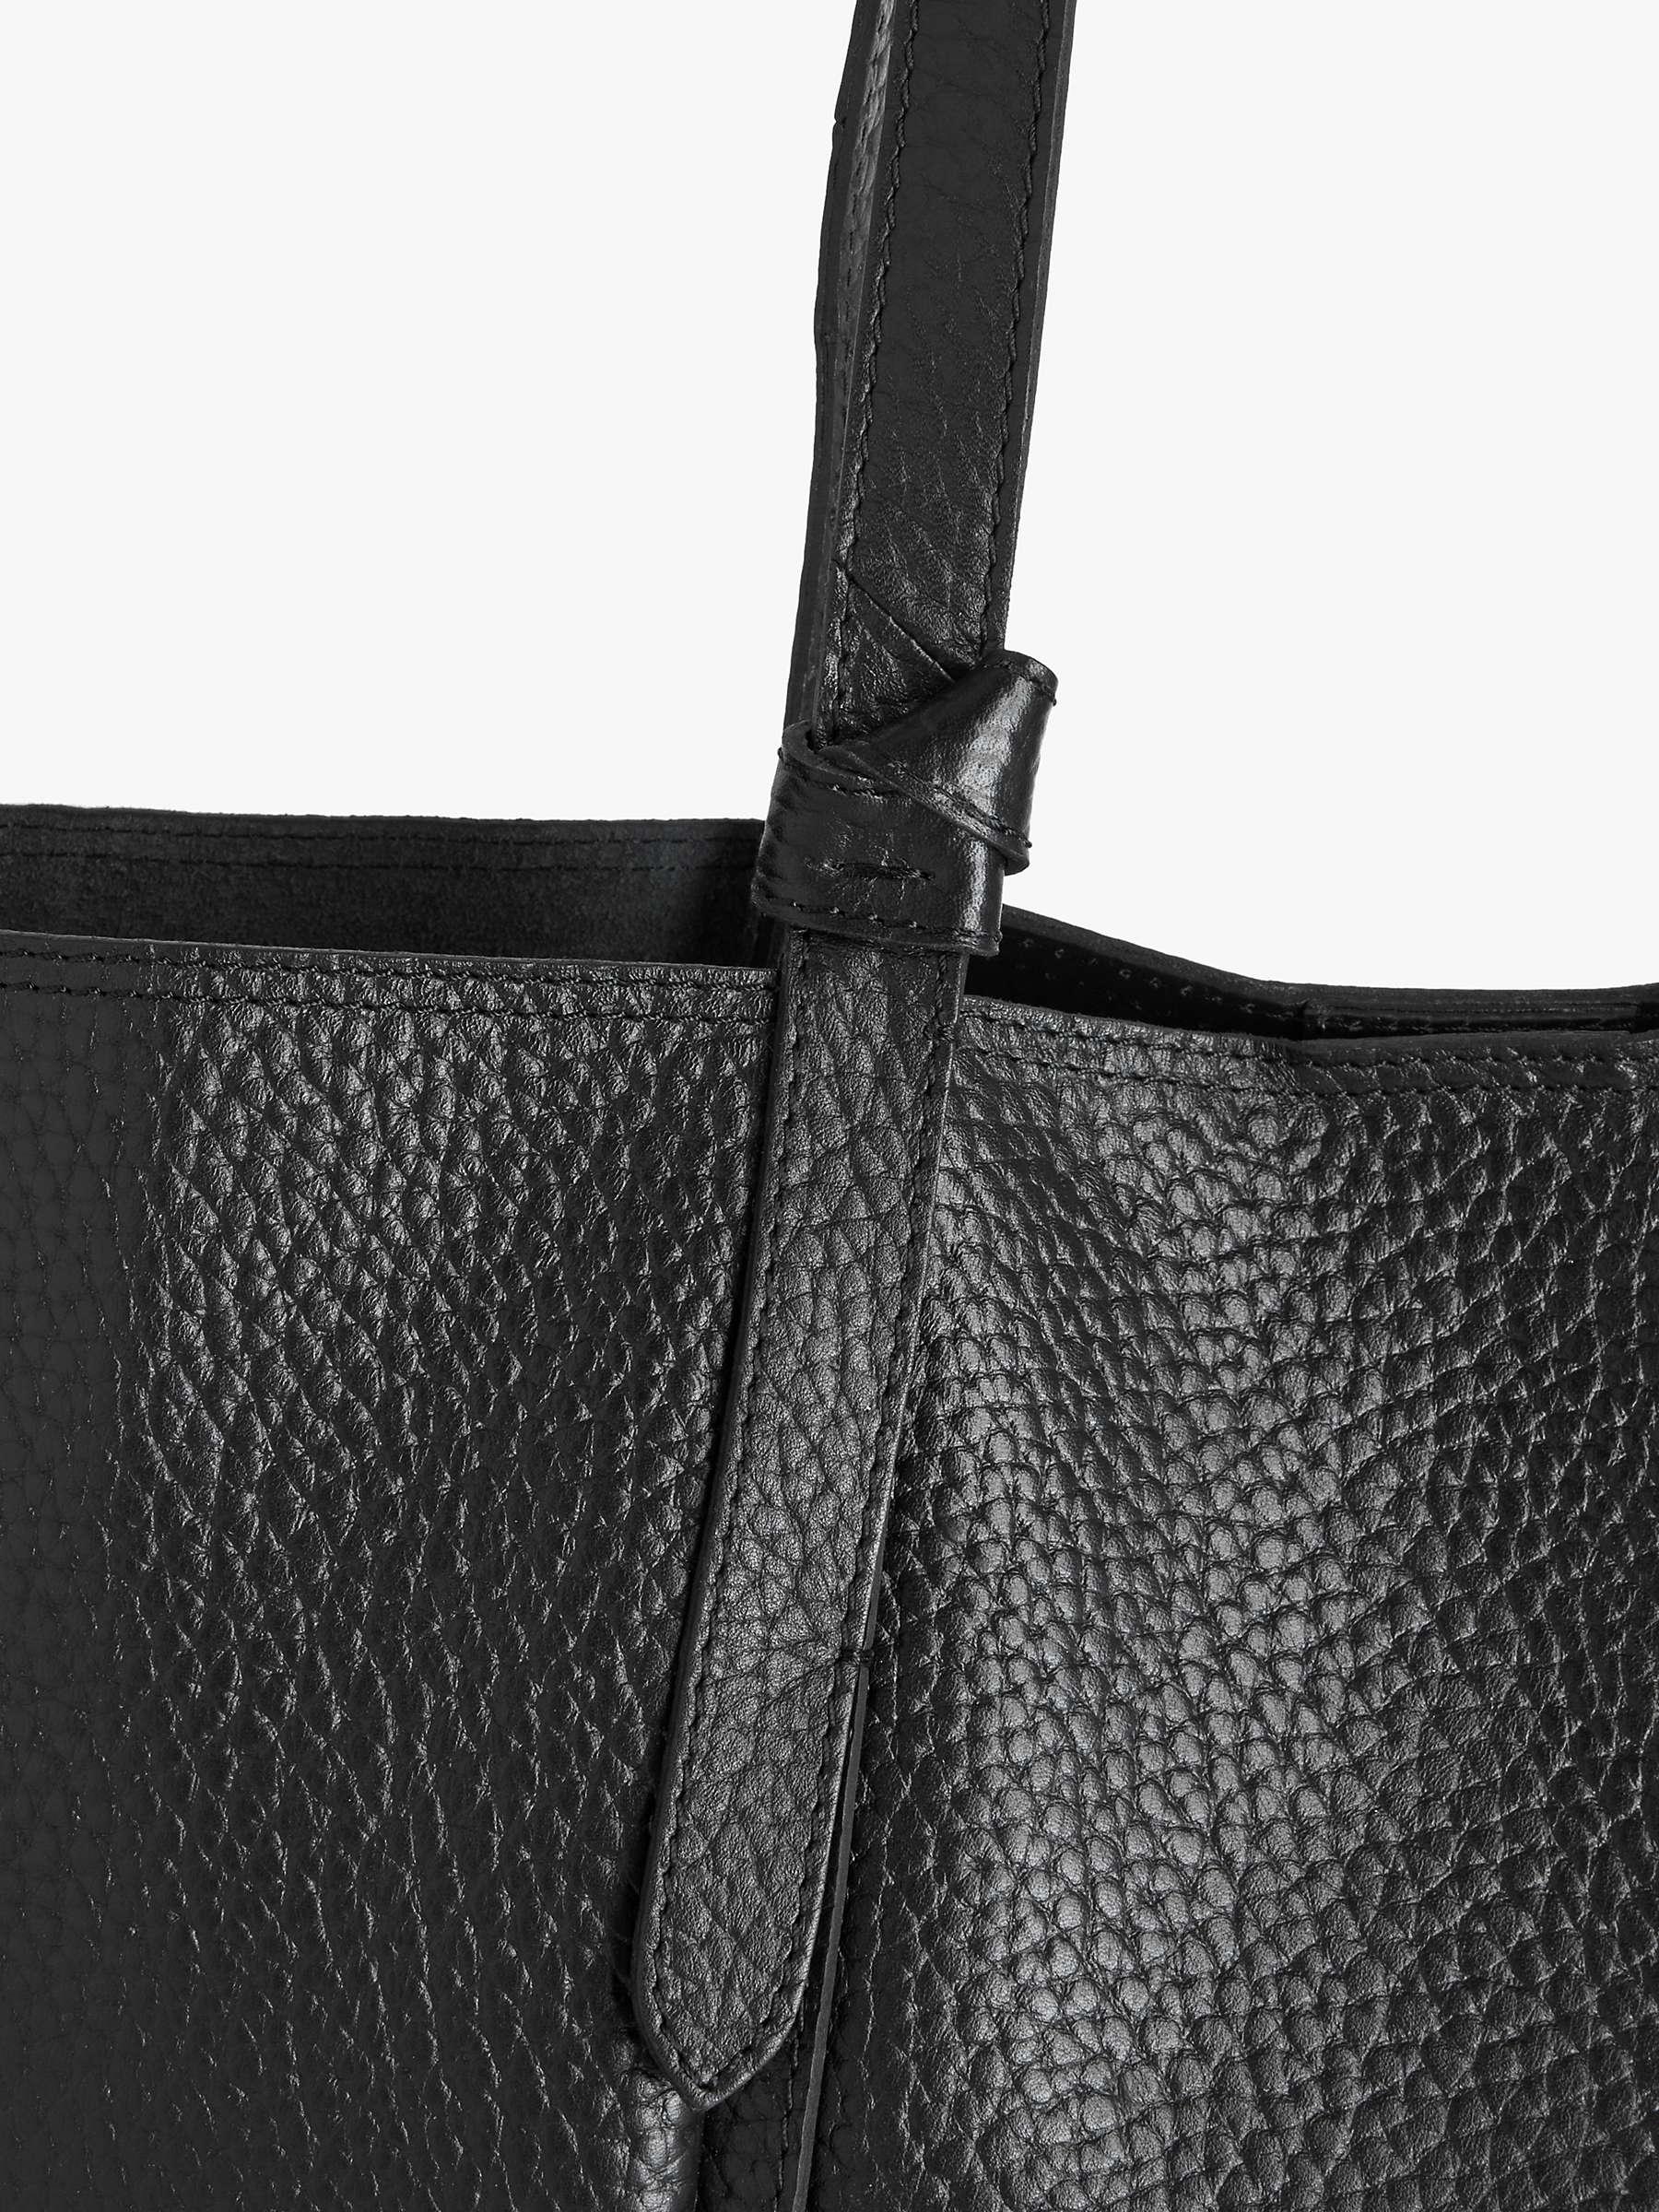 Buy John Lewis Knot Handle Leather Tote Bag Online at johnlewis.com